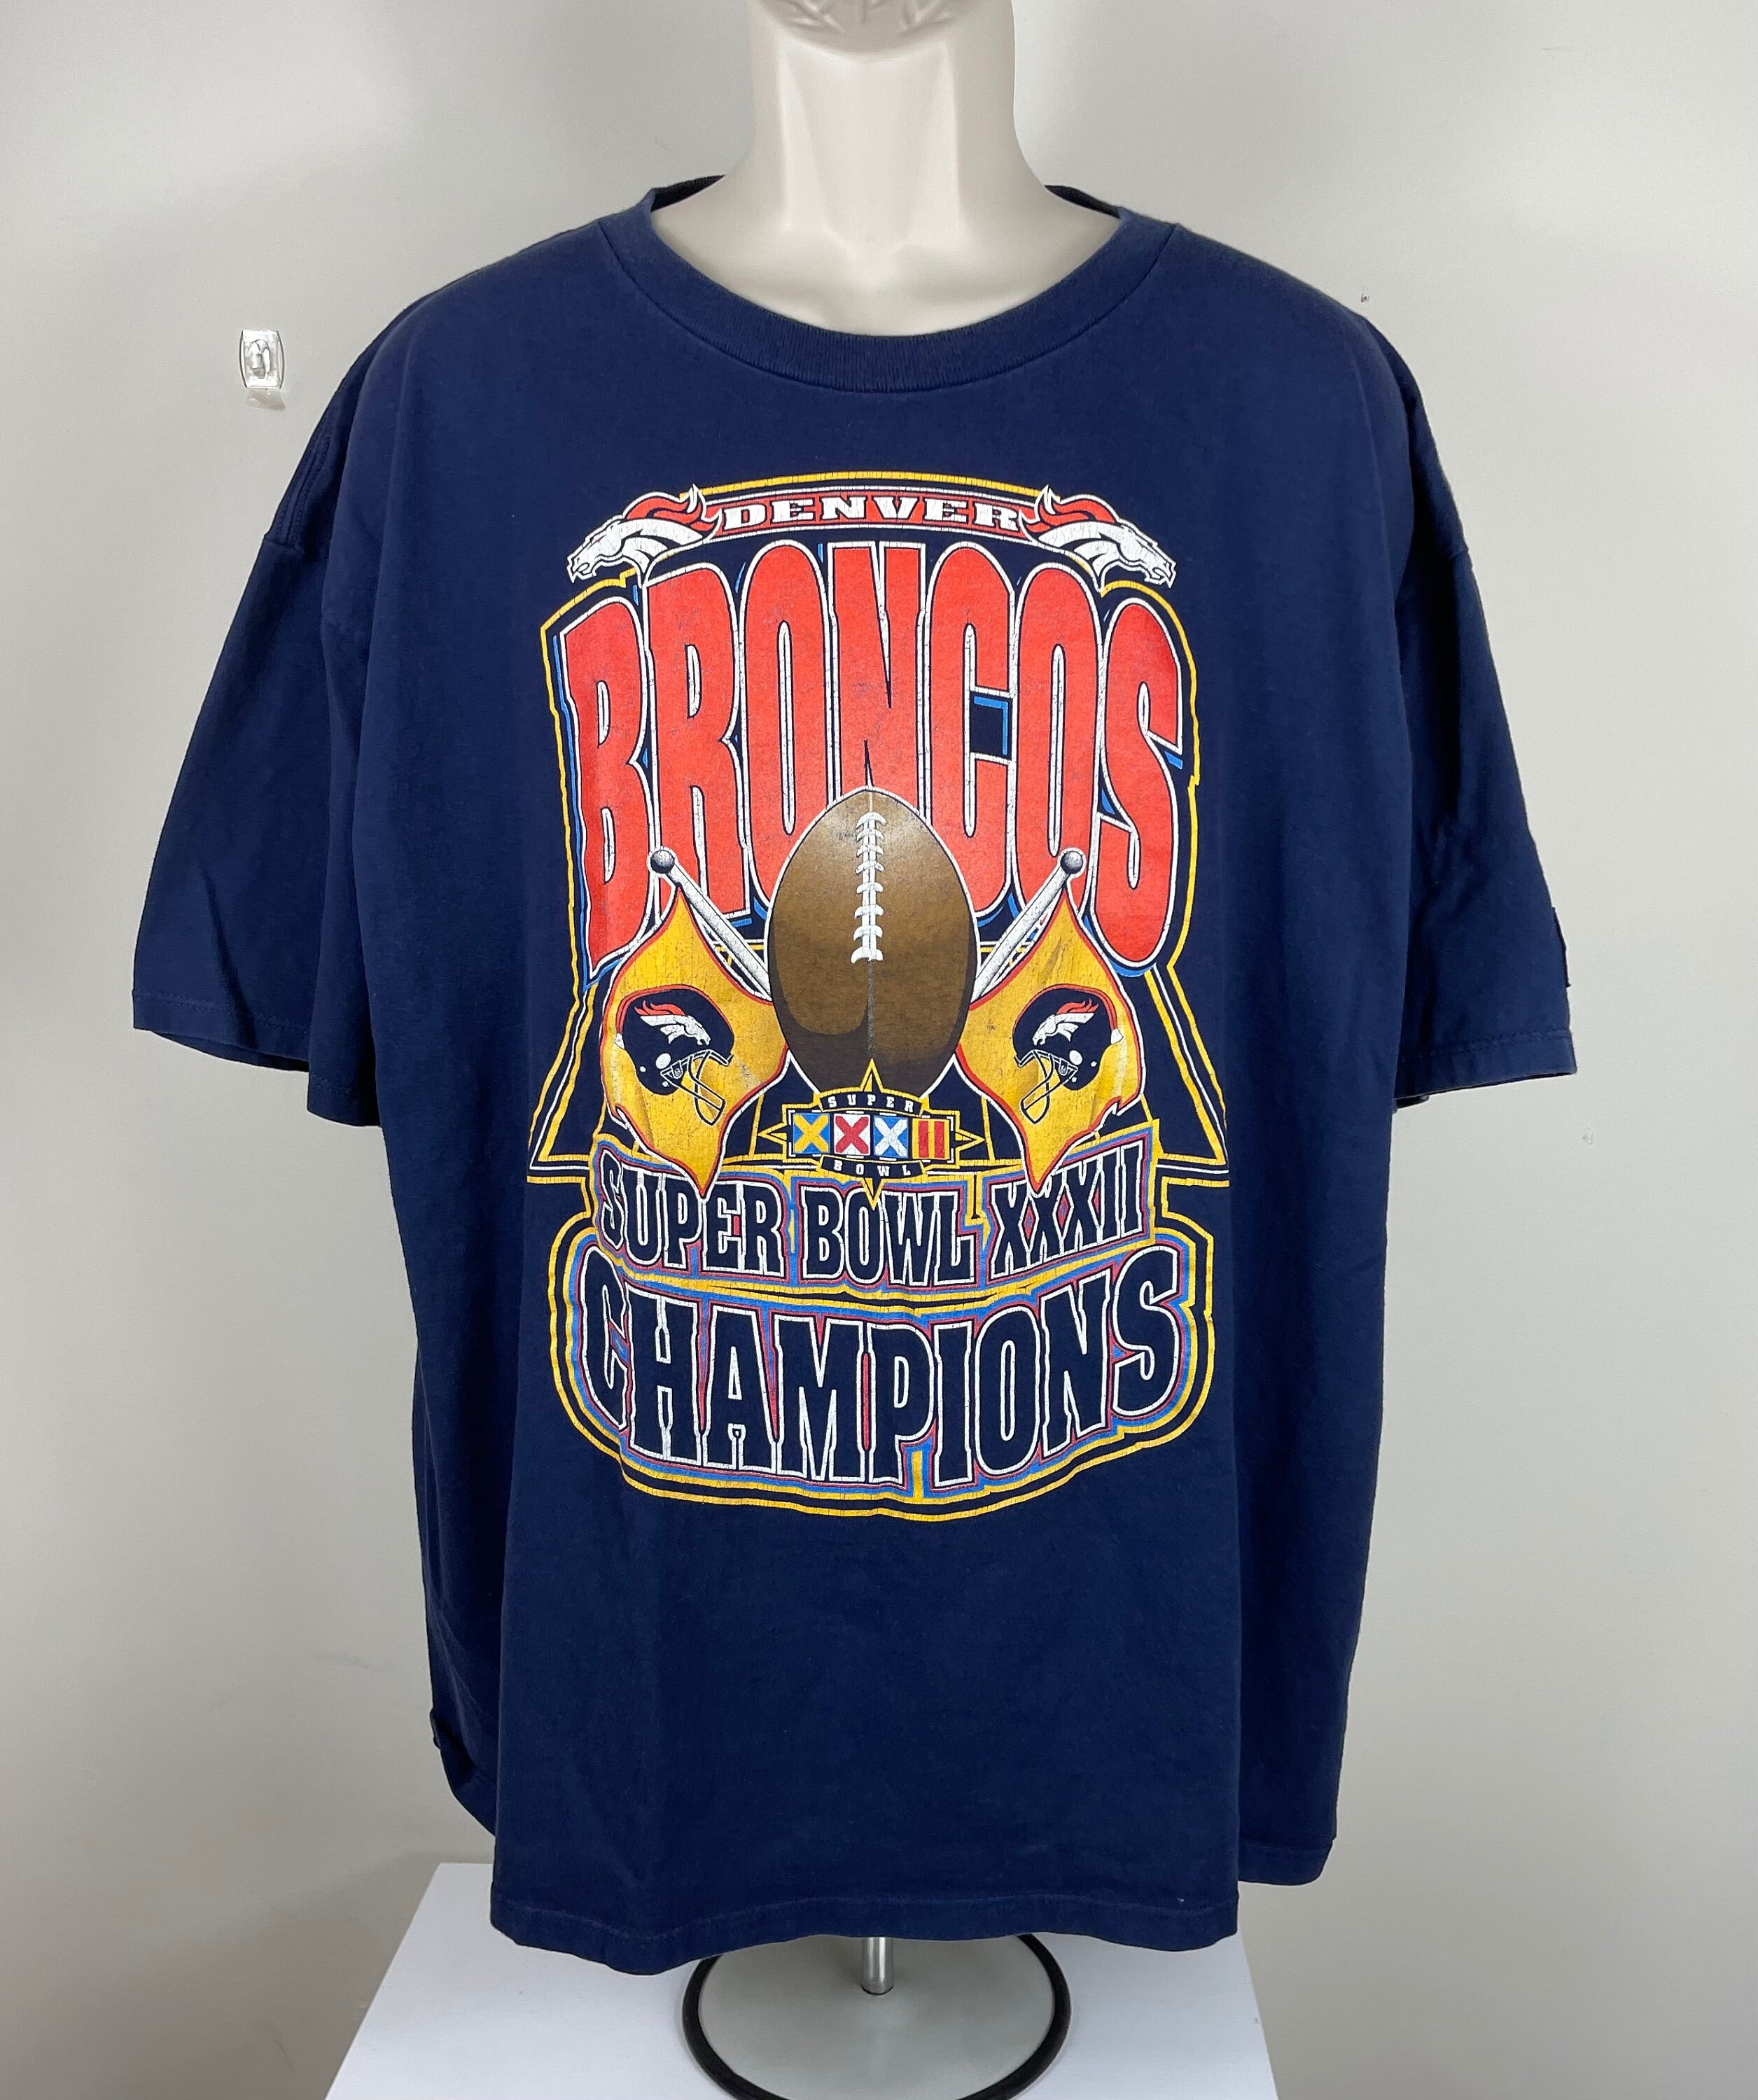 Eagles VS Kansas T-Shirt, Super Bowl LVII T-Shirt - Ink In Action